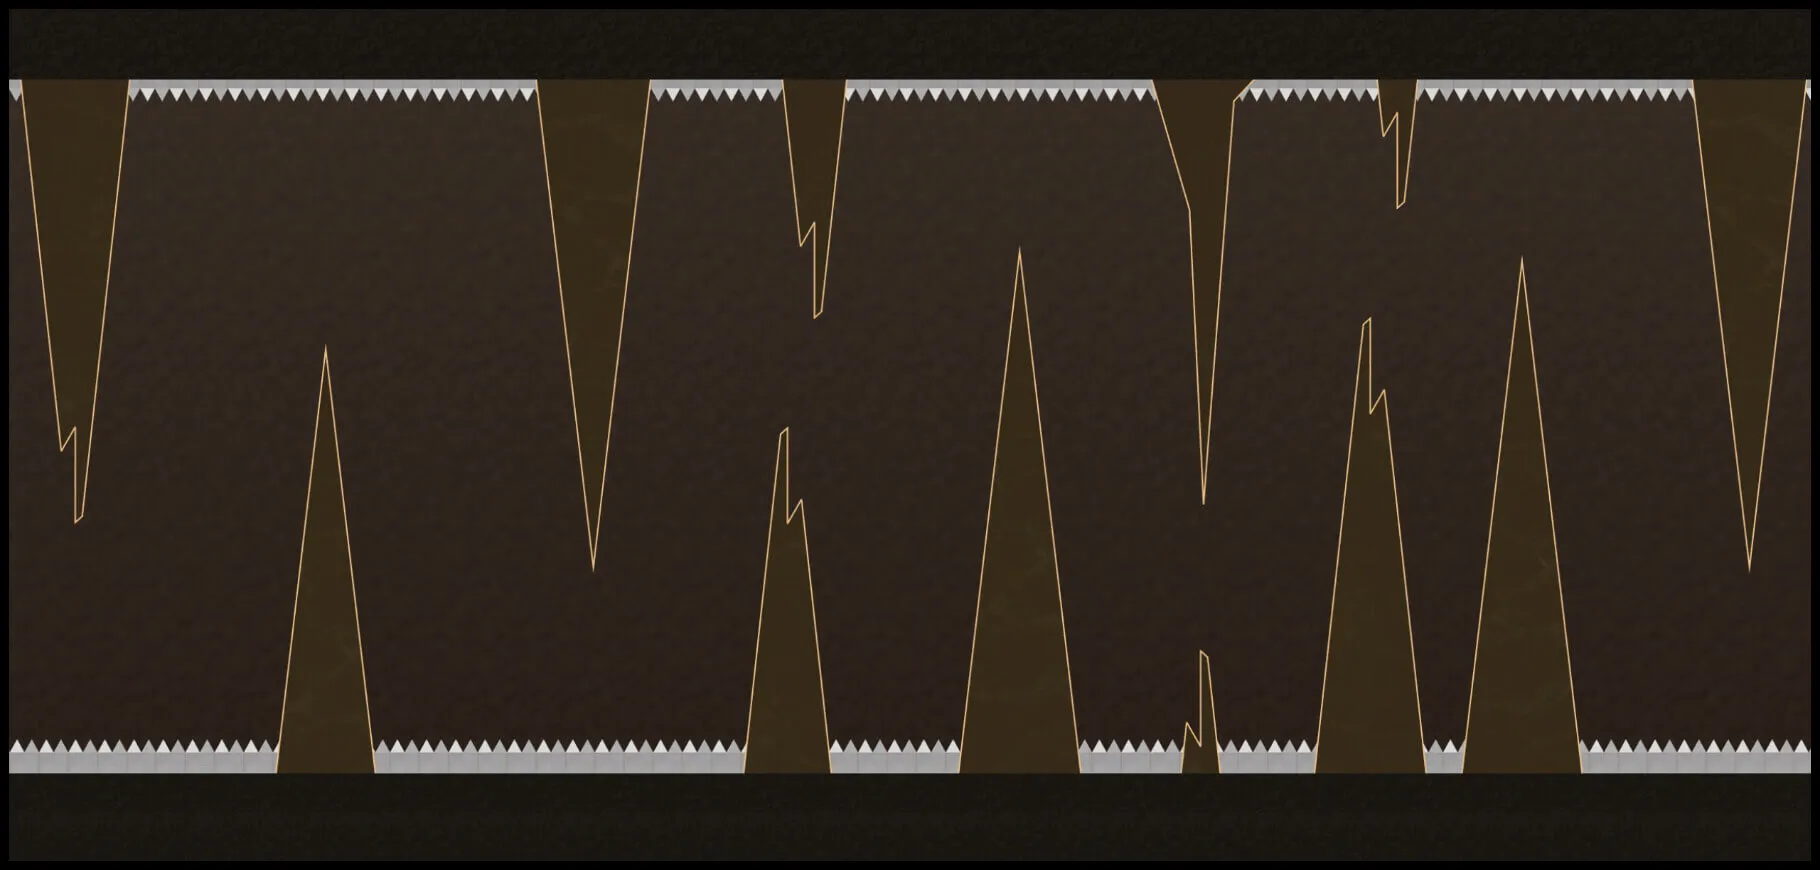 minecramped level screenshot from the game reflex runner.